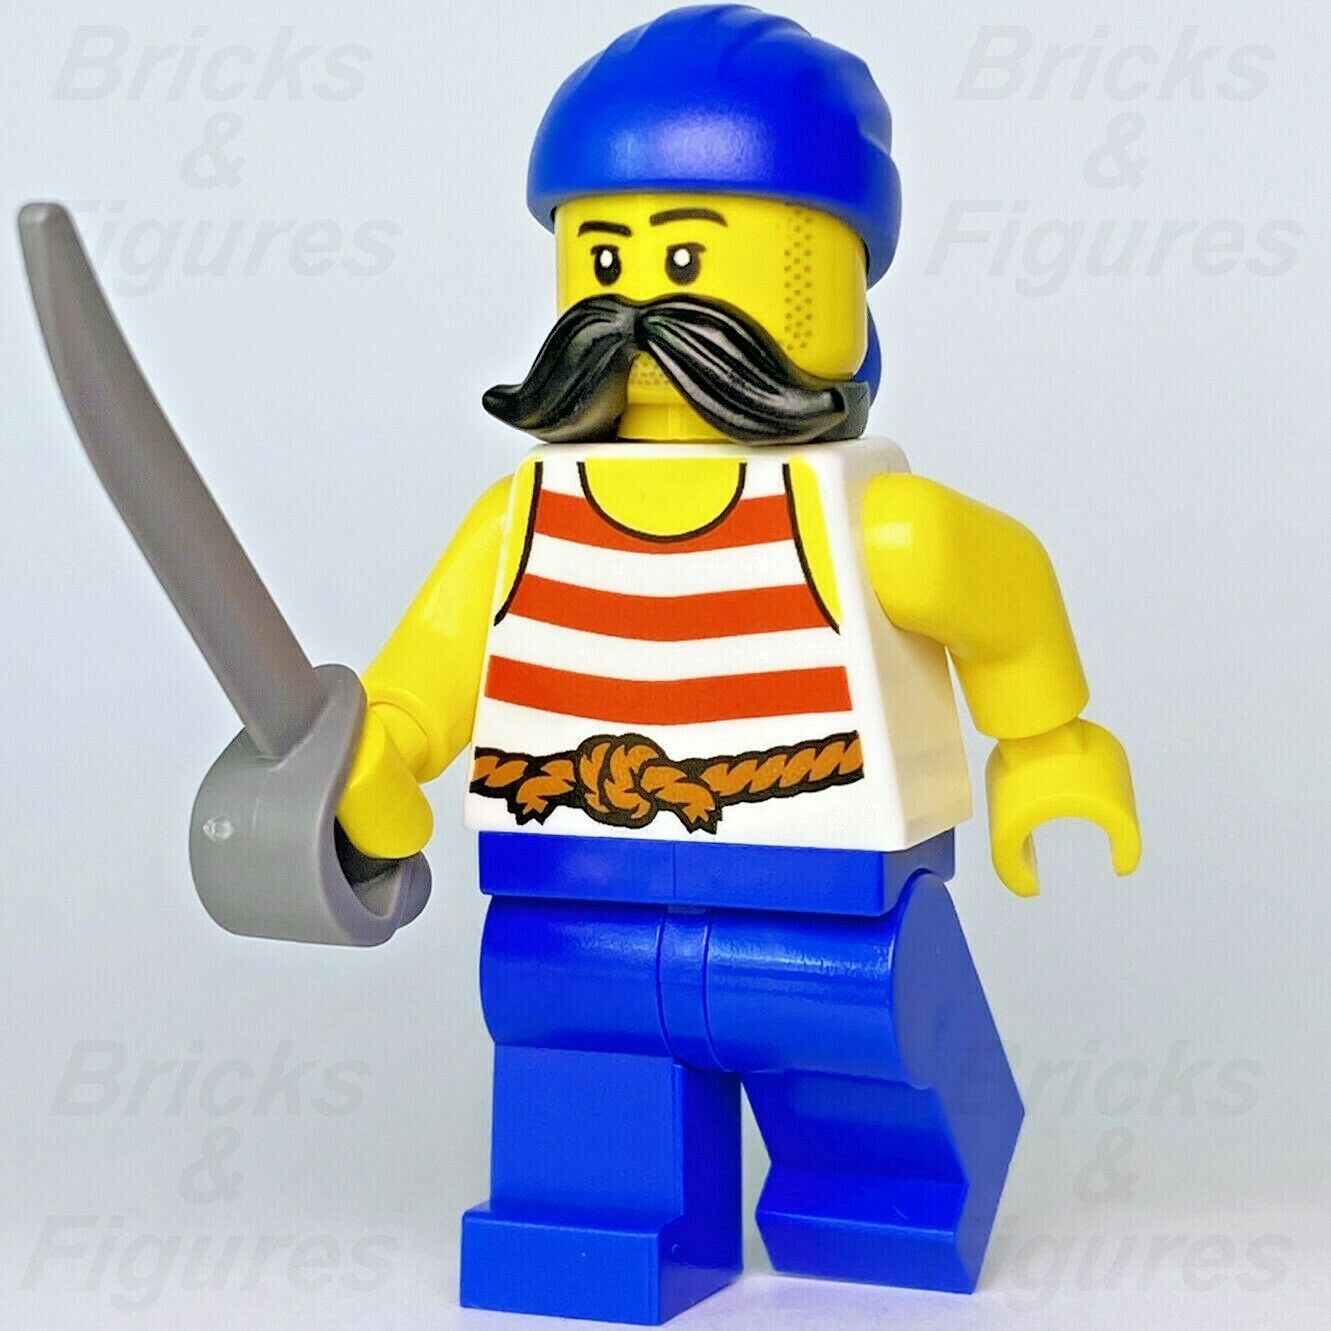 New Ideas LEGO Port Pirates Minifigure with Sword from set 21322 idea069 - Bricks & Figures